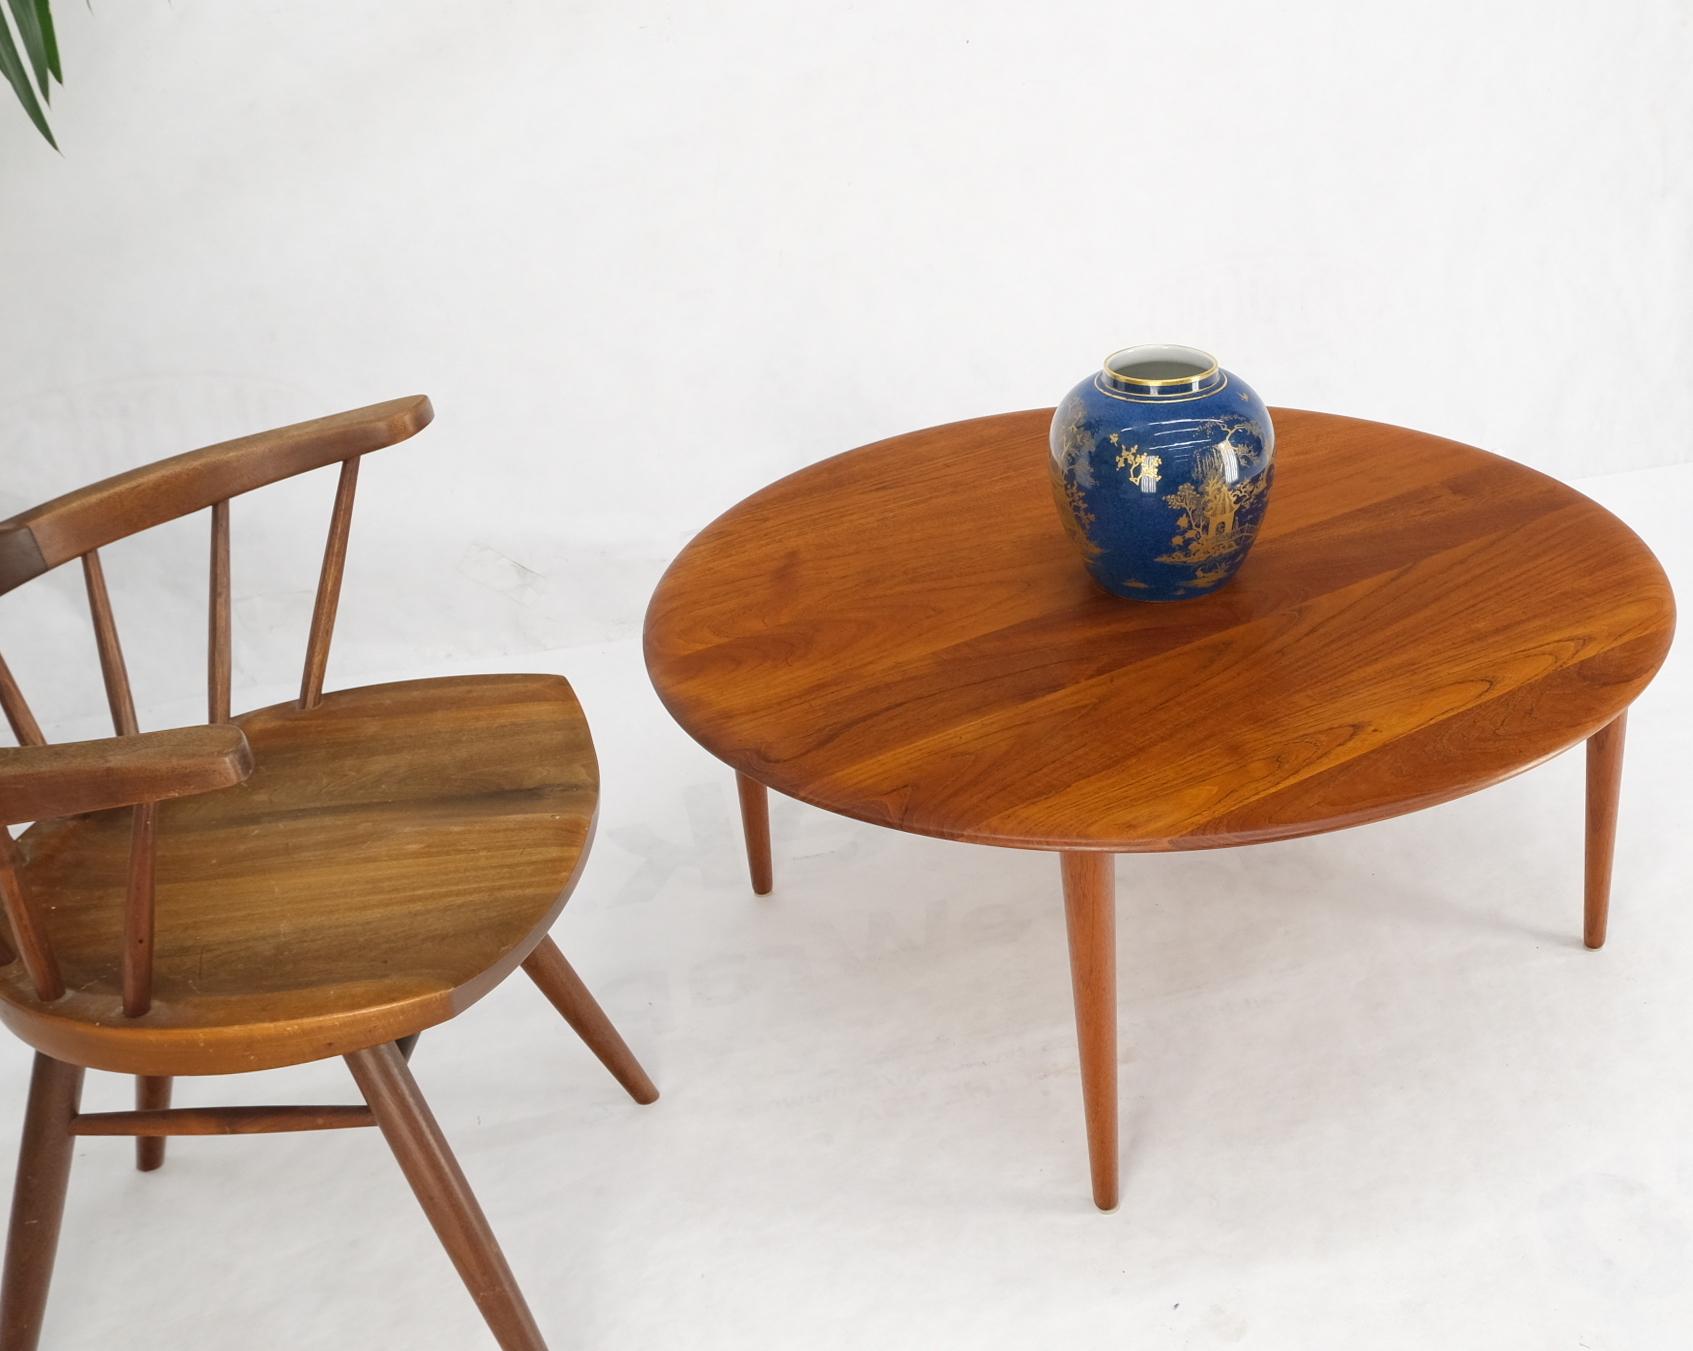 Piter Hvitd for France & Son round solid teak Danish Mid-Century Modern coffee table.